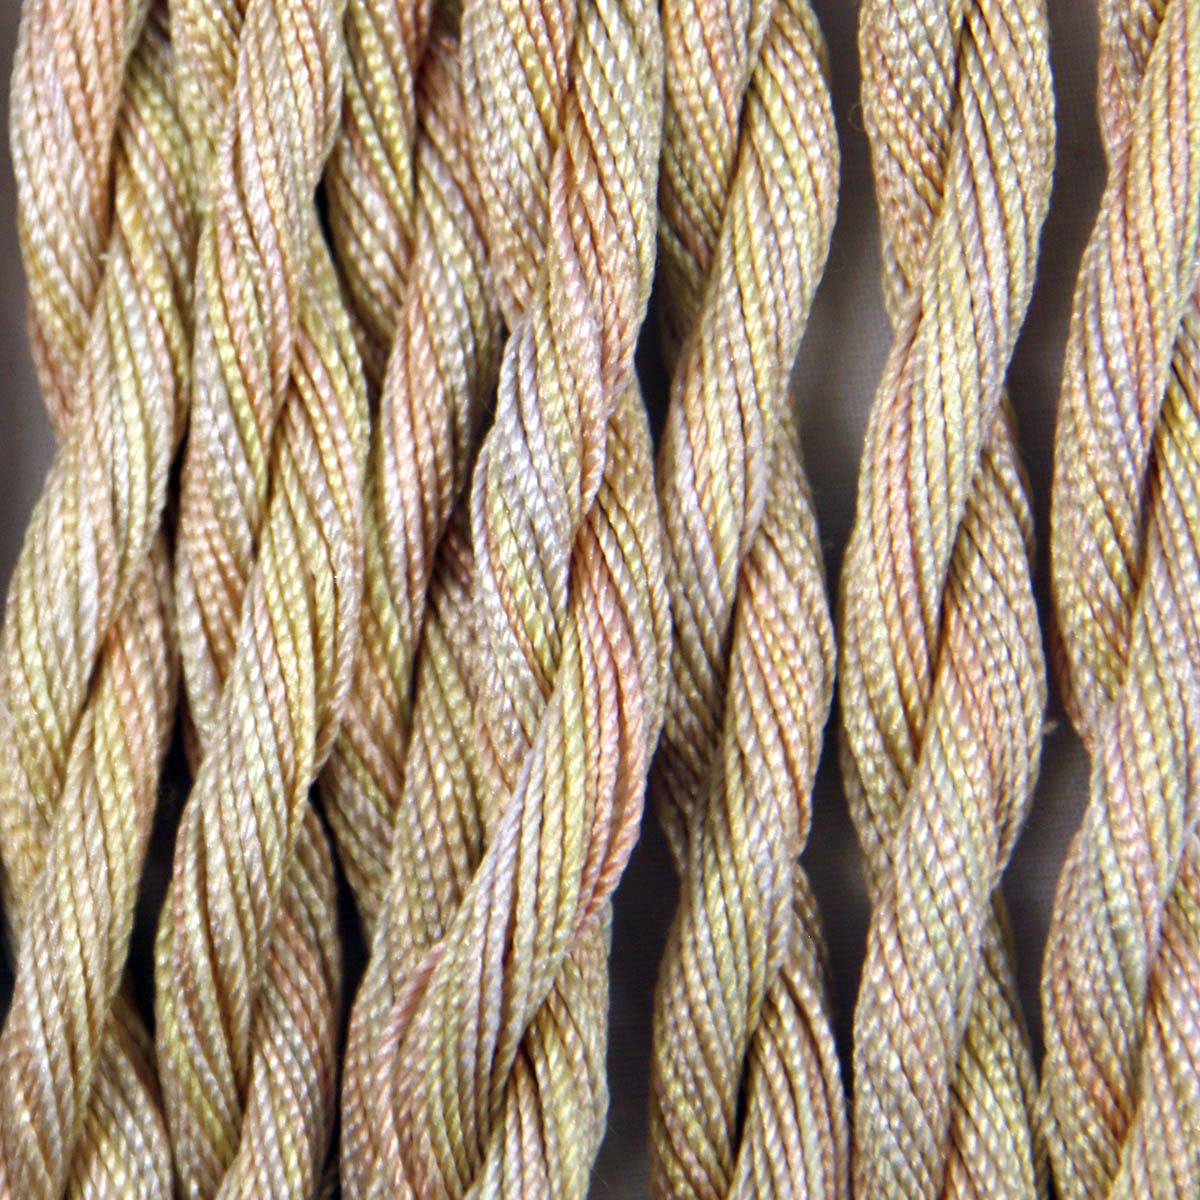 www.colourstreams.com.au Colour Streams Hand Dyed Silk Threads Silken Strands Ophir Exotic Lights Aurora Slow Stitch Embroidery Textile Arts Fibre DL 6 Harvest Oranges Creams Neutrals